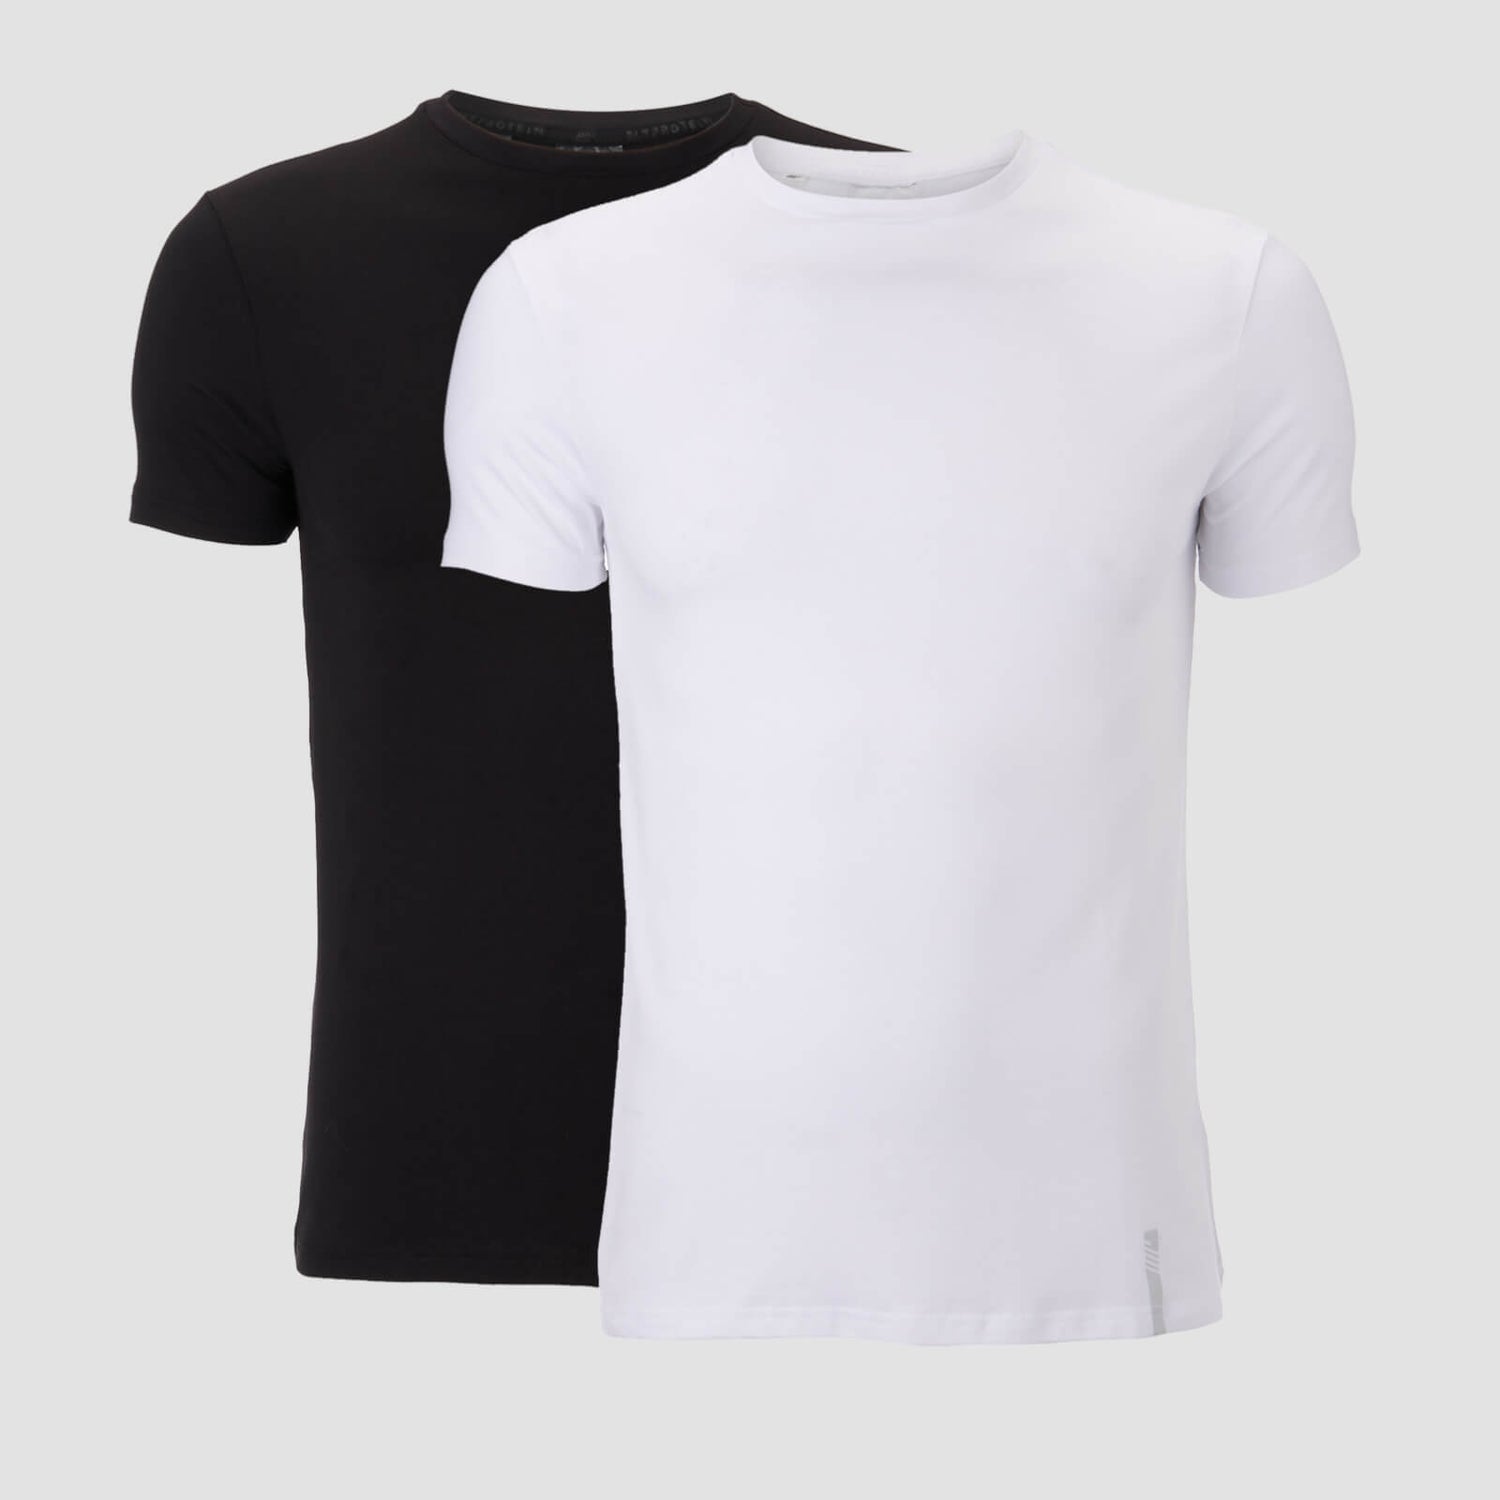 MP Men's Luxe Classic Crew T-Shirt - Black/White (2 Pack) - XS